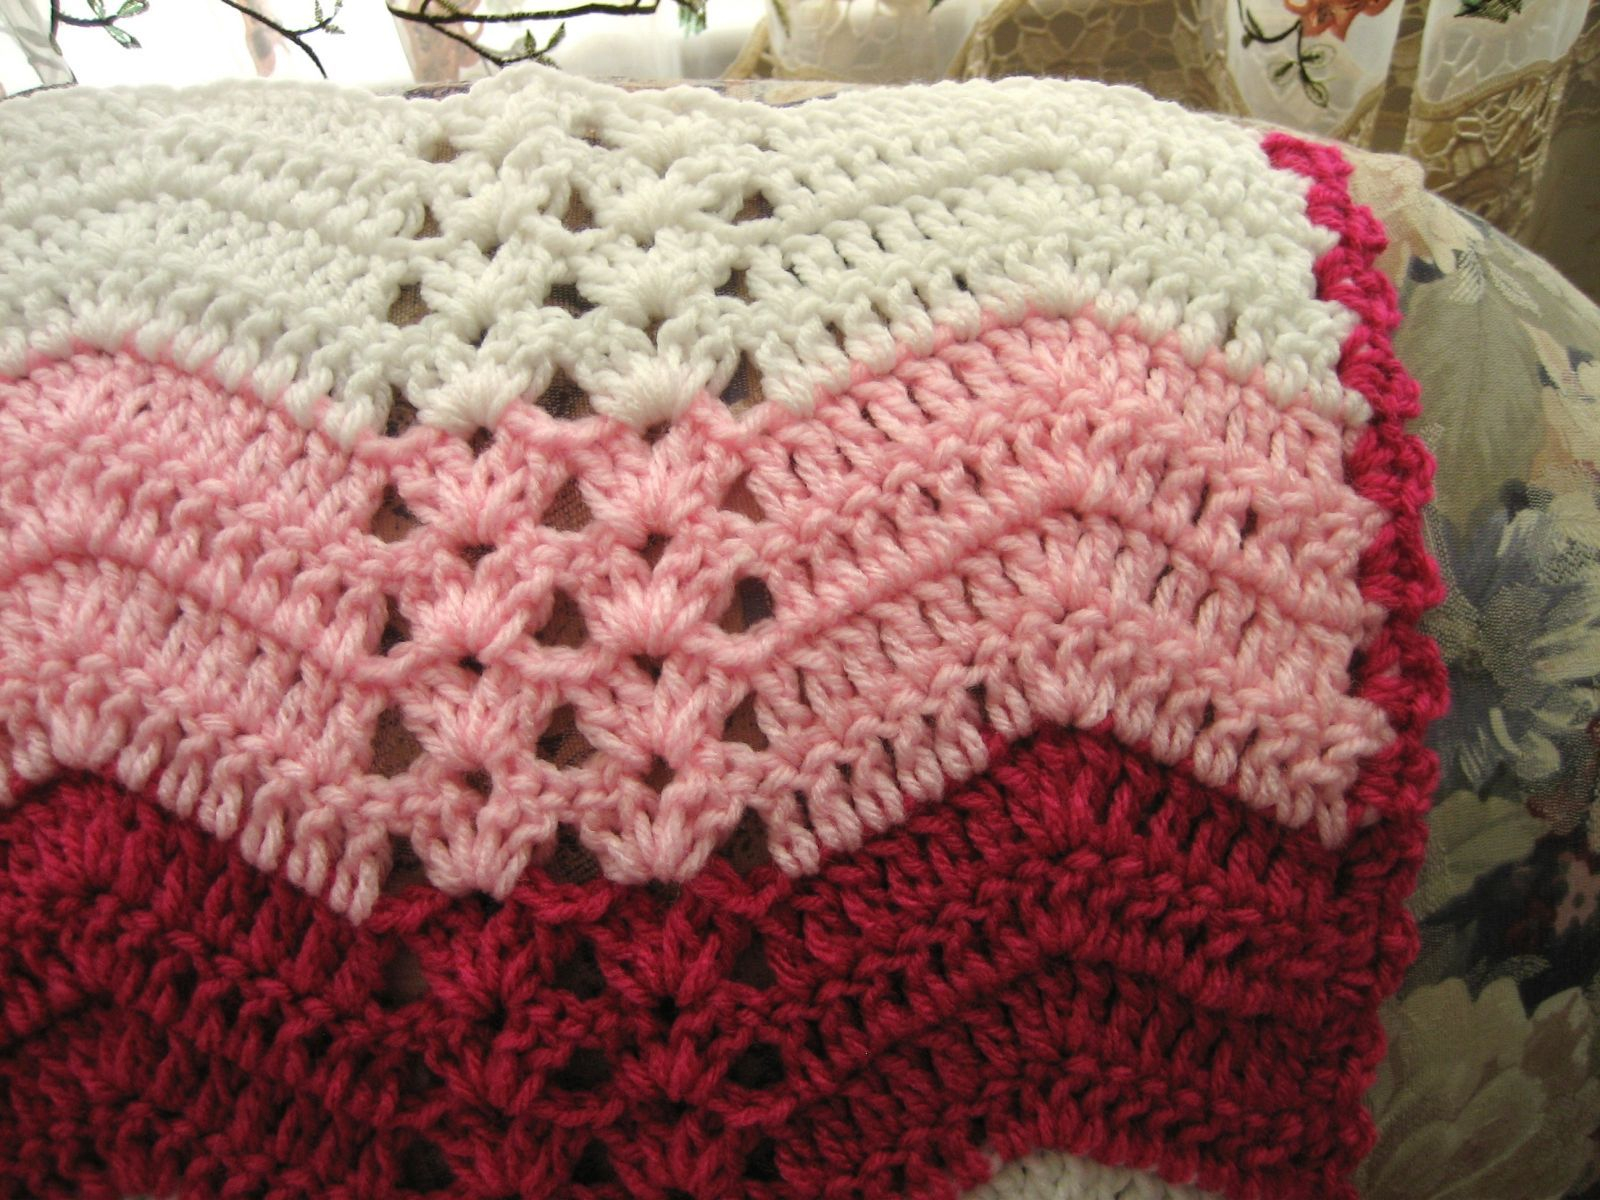 Crochet Ripple Afghan Patterns White Chocolate Strawberry Double Shell Ripple Crochet Blankets